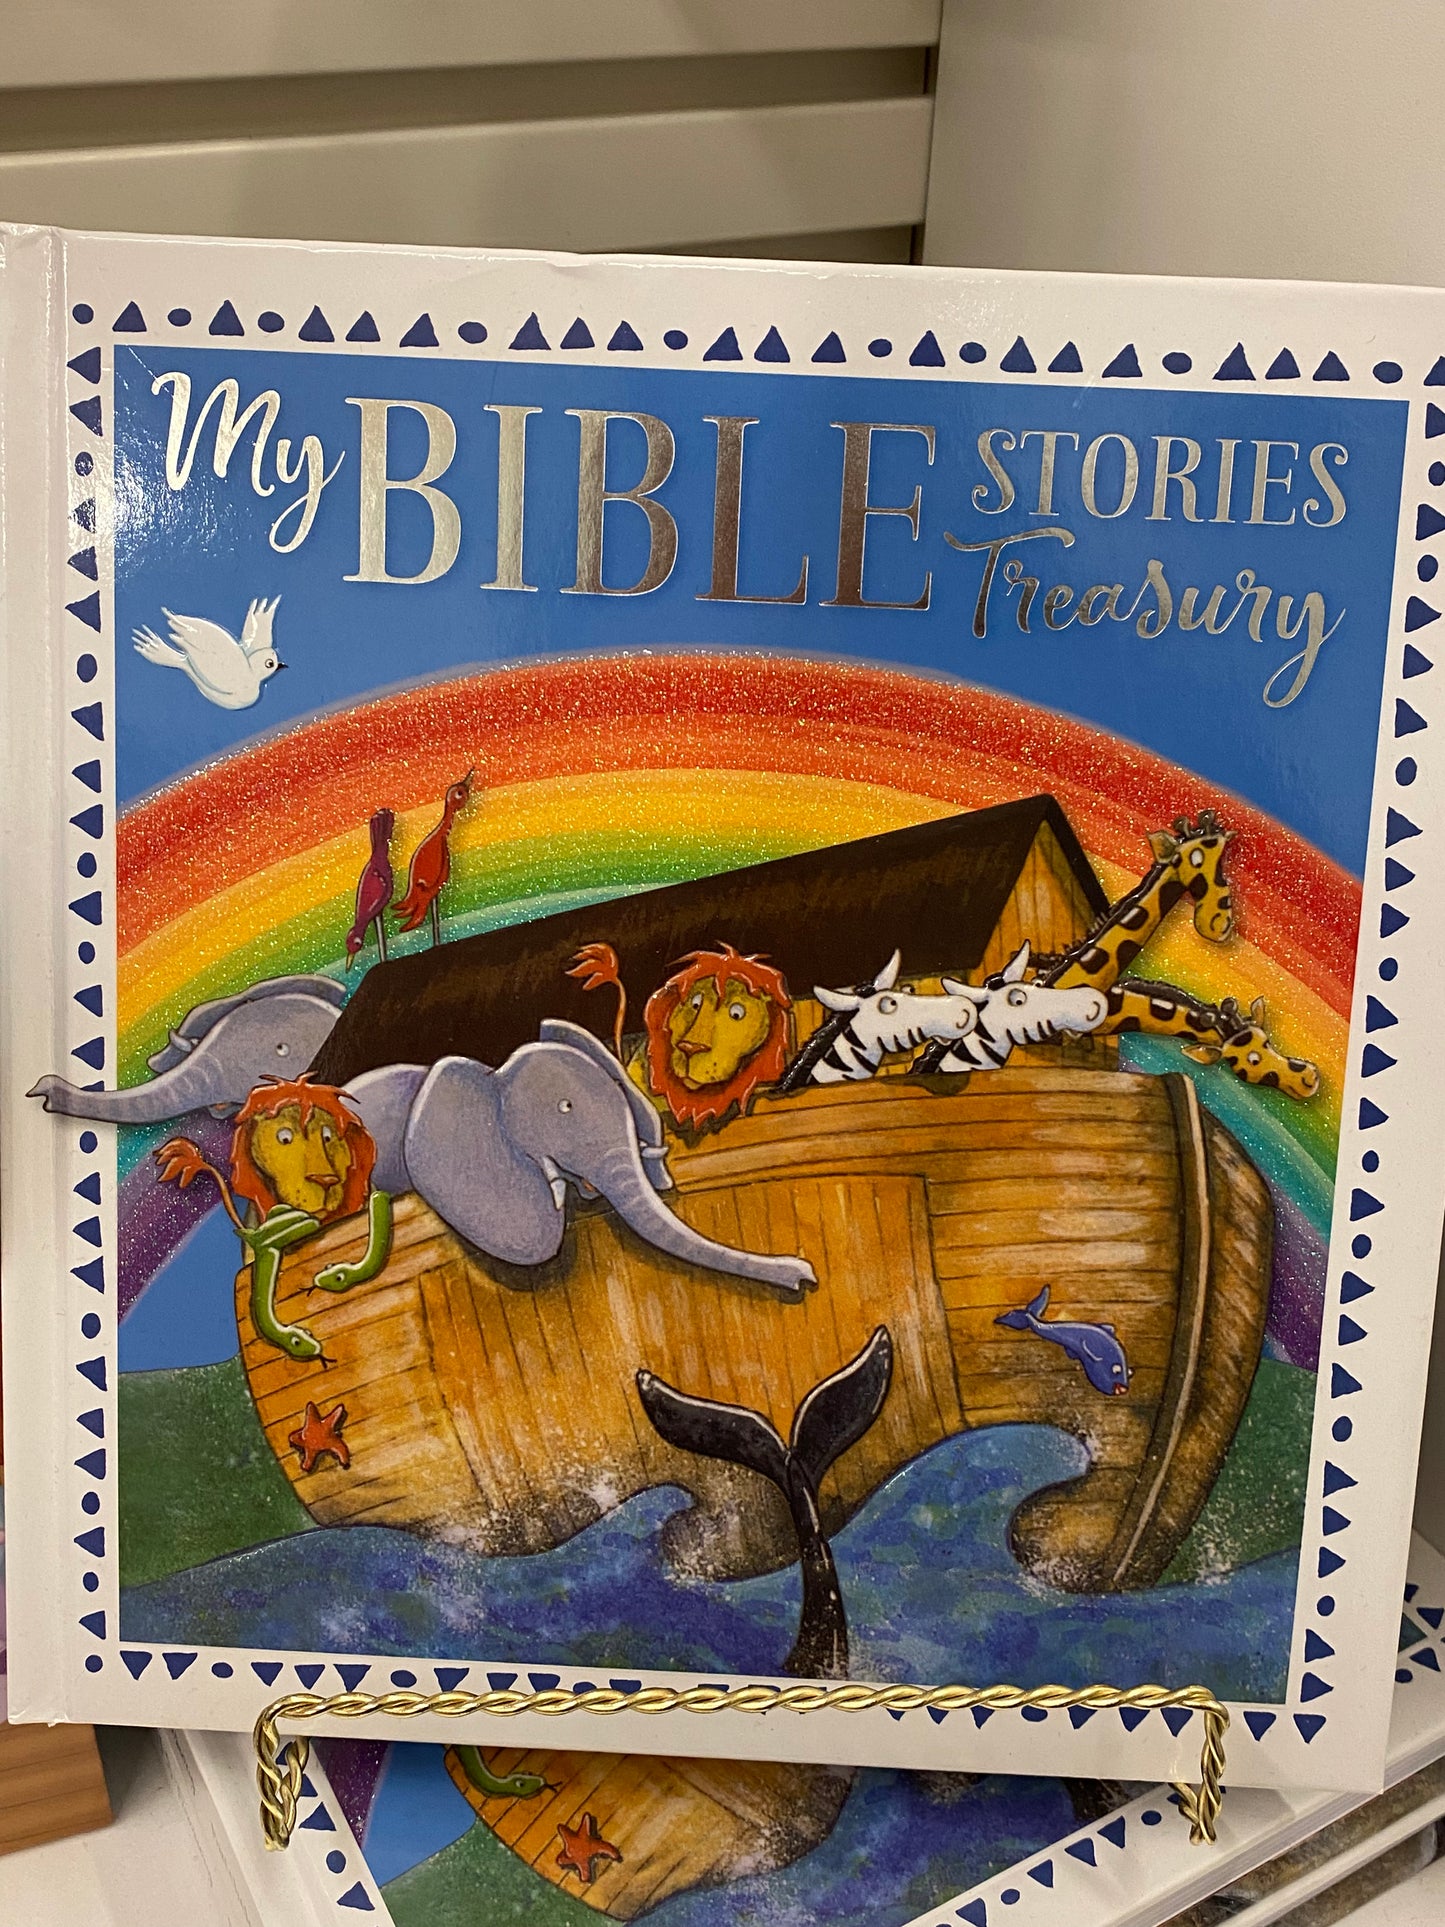 My Bible stories treasury